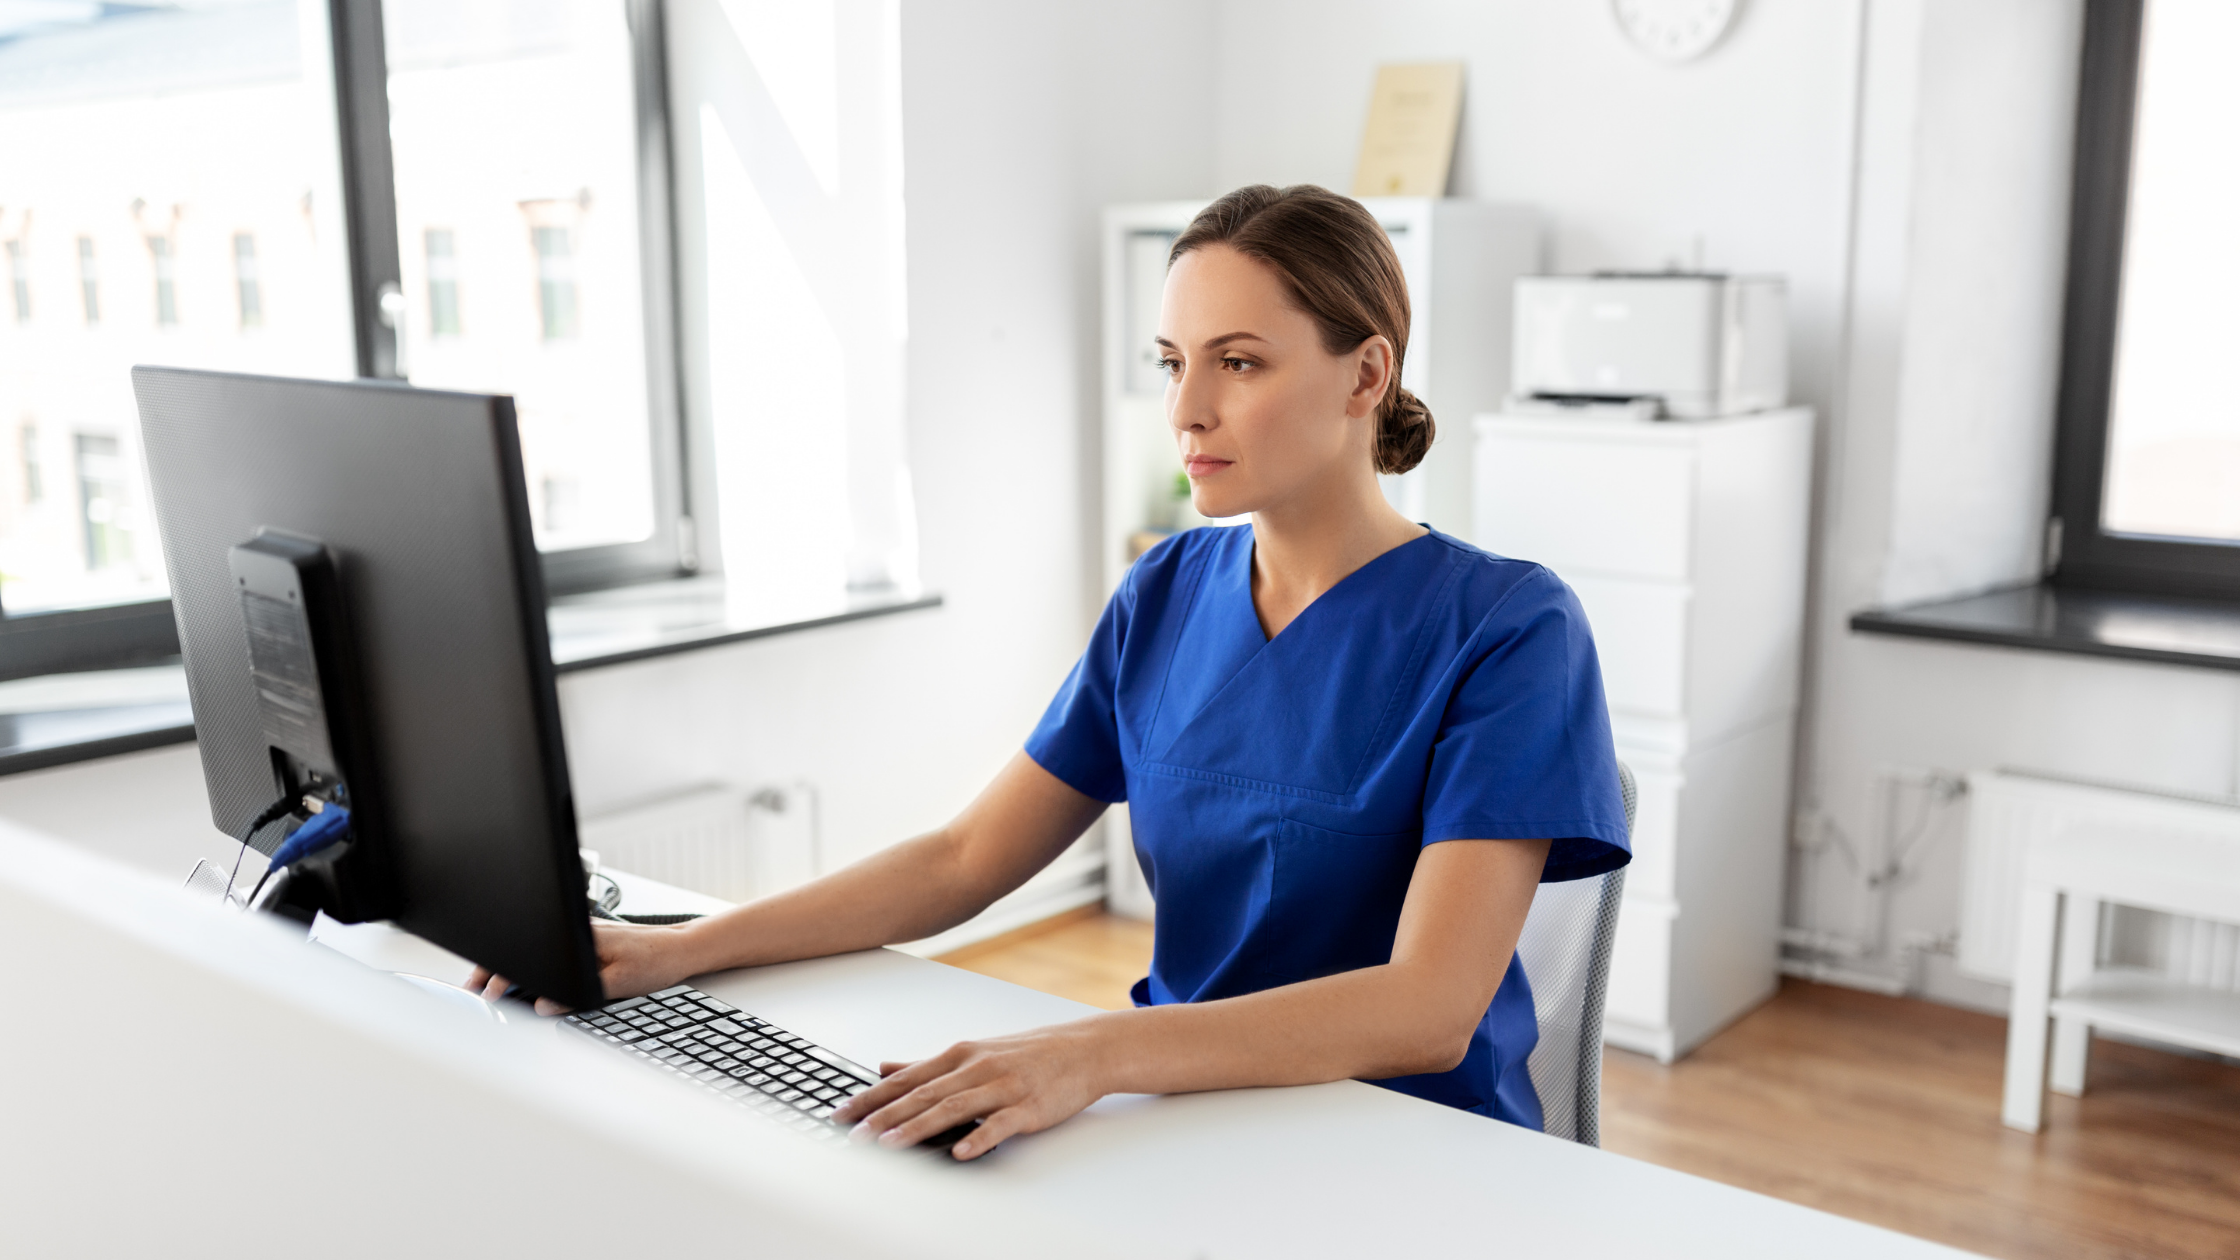 Nursing student using the computer